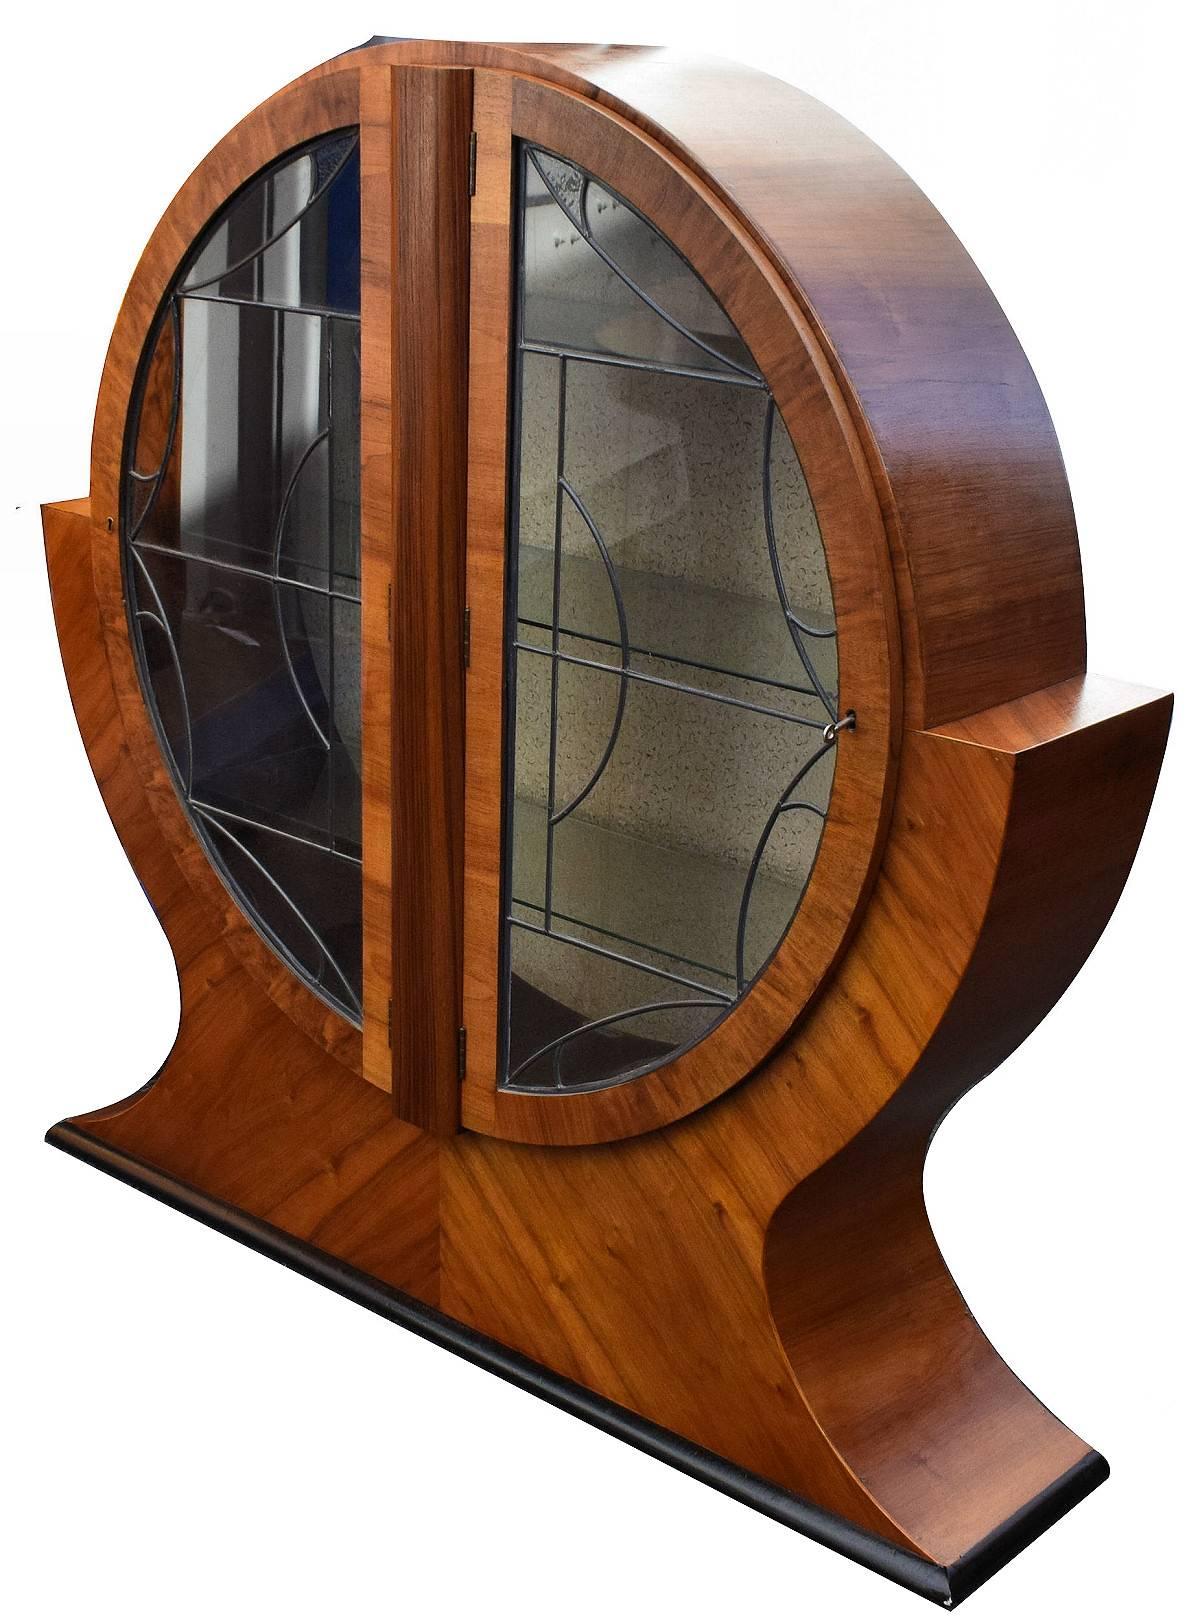 Glass Art Deco Circular Display Vitrine Cabinet in Walnut, 1930s English